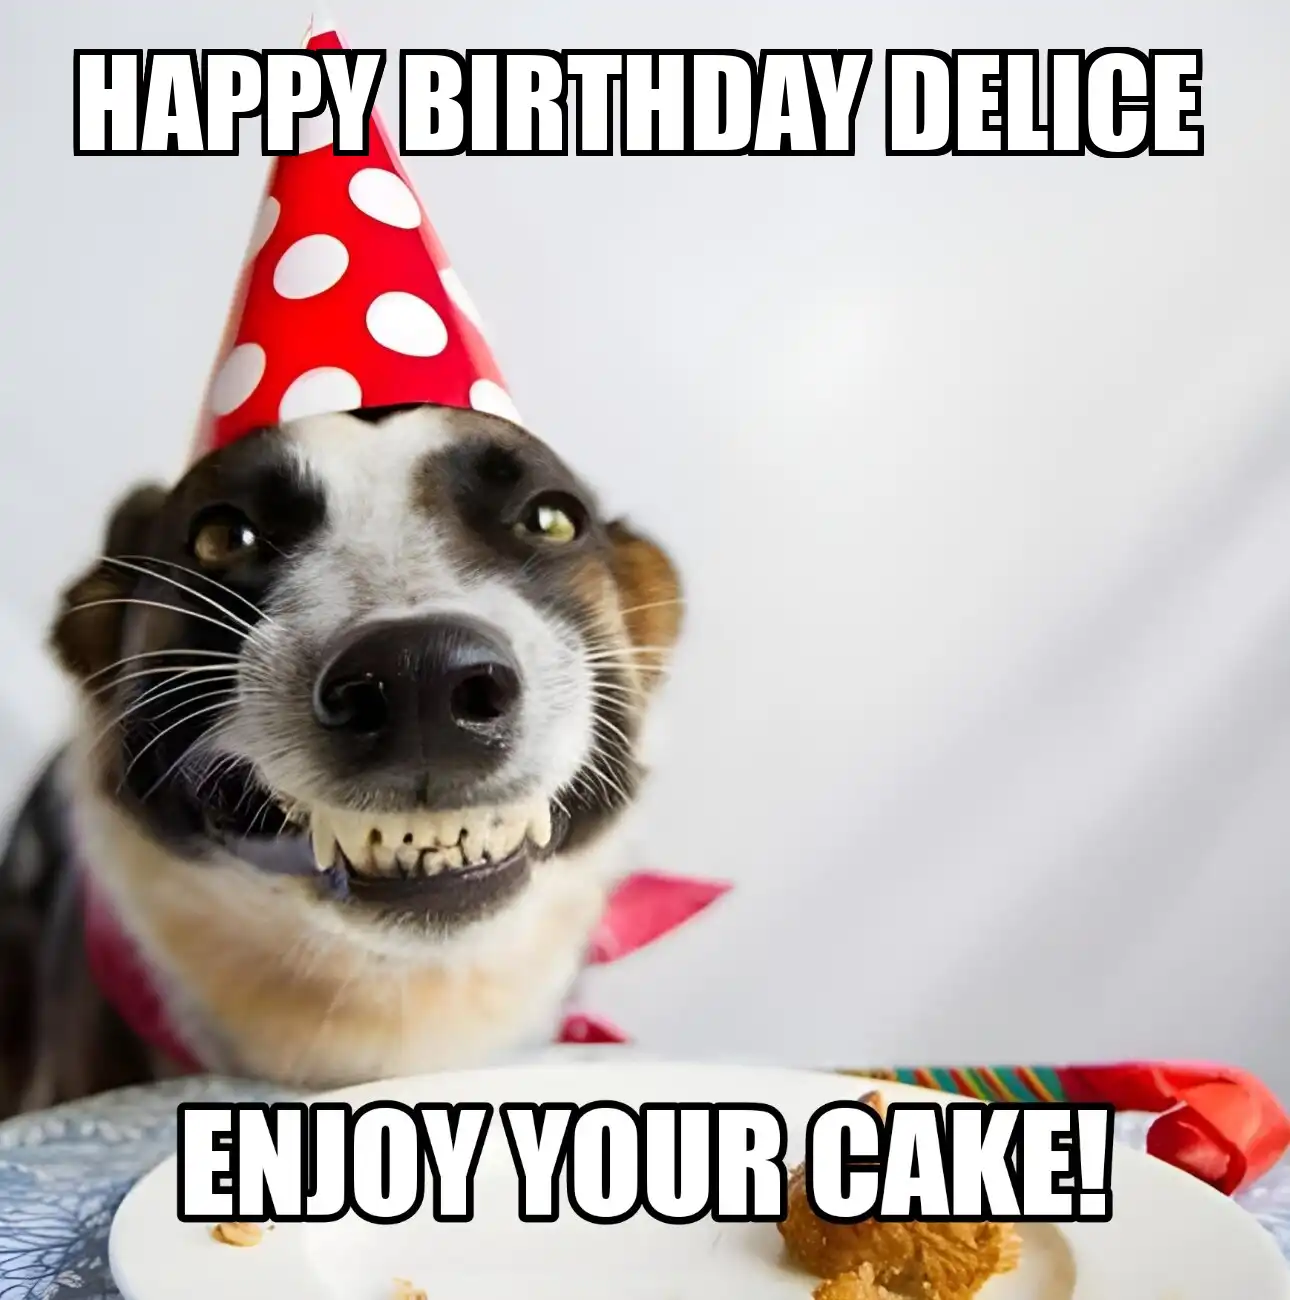 Happy Birthday Delice Enjoy Your Cake Dog Meme